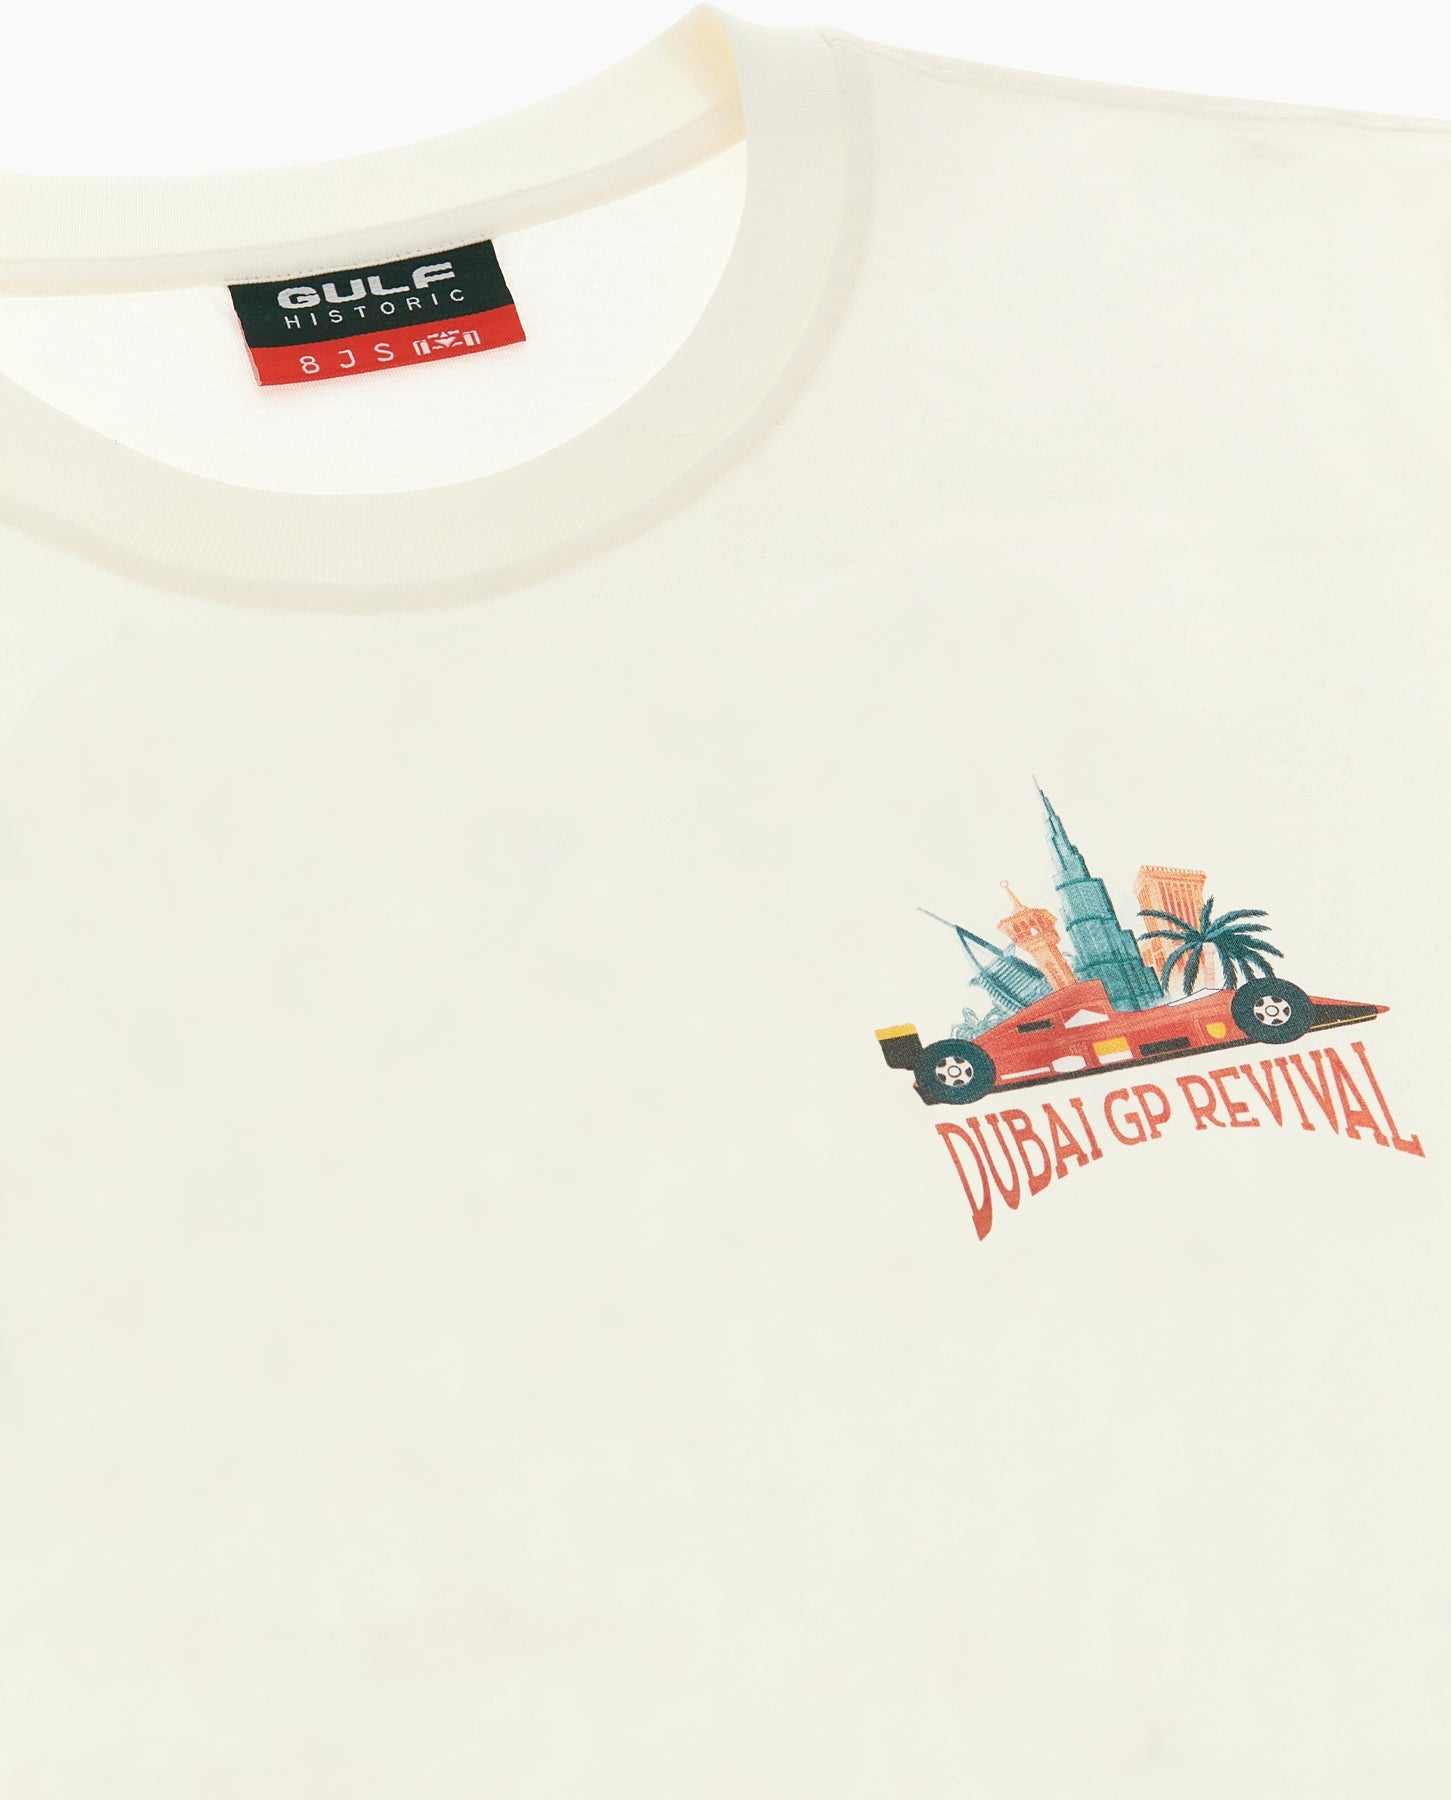 Gulf Historic x 8Js | Dubai GP Revival T-Shirt-T-Shirt-Gulf Historic-gpx-store